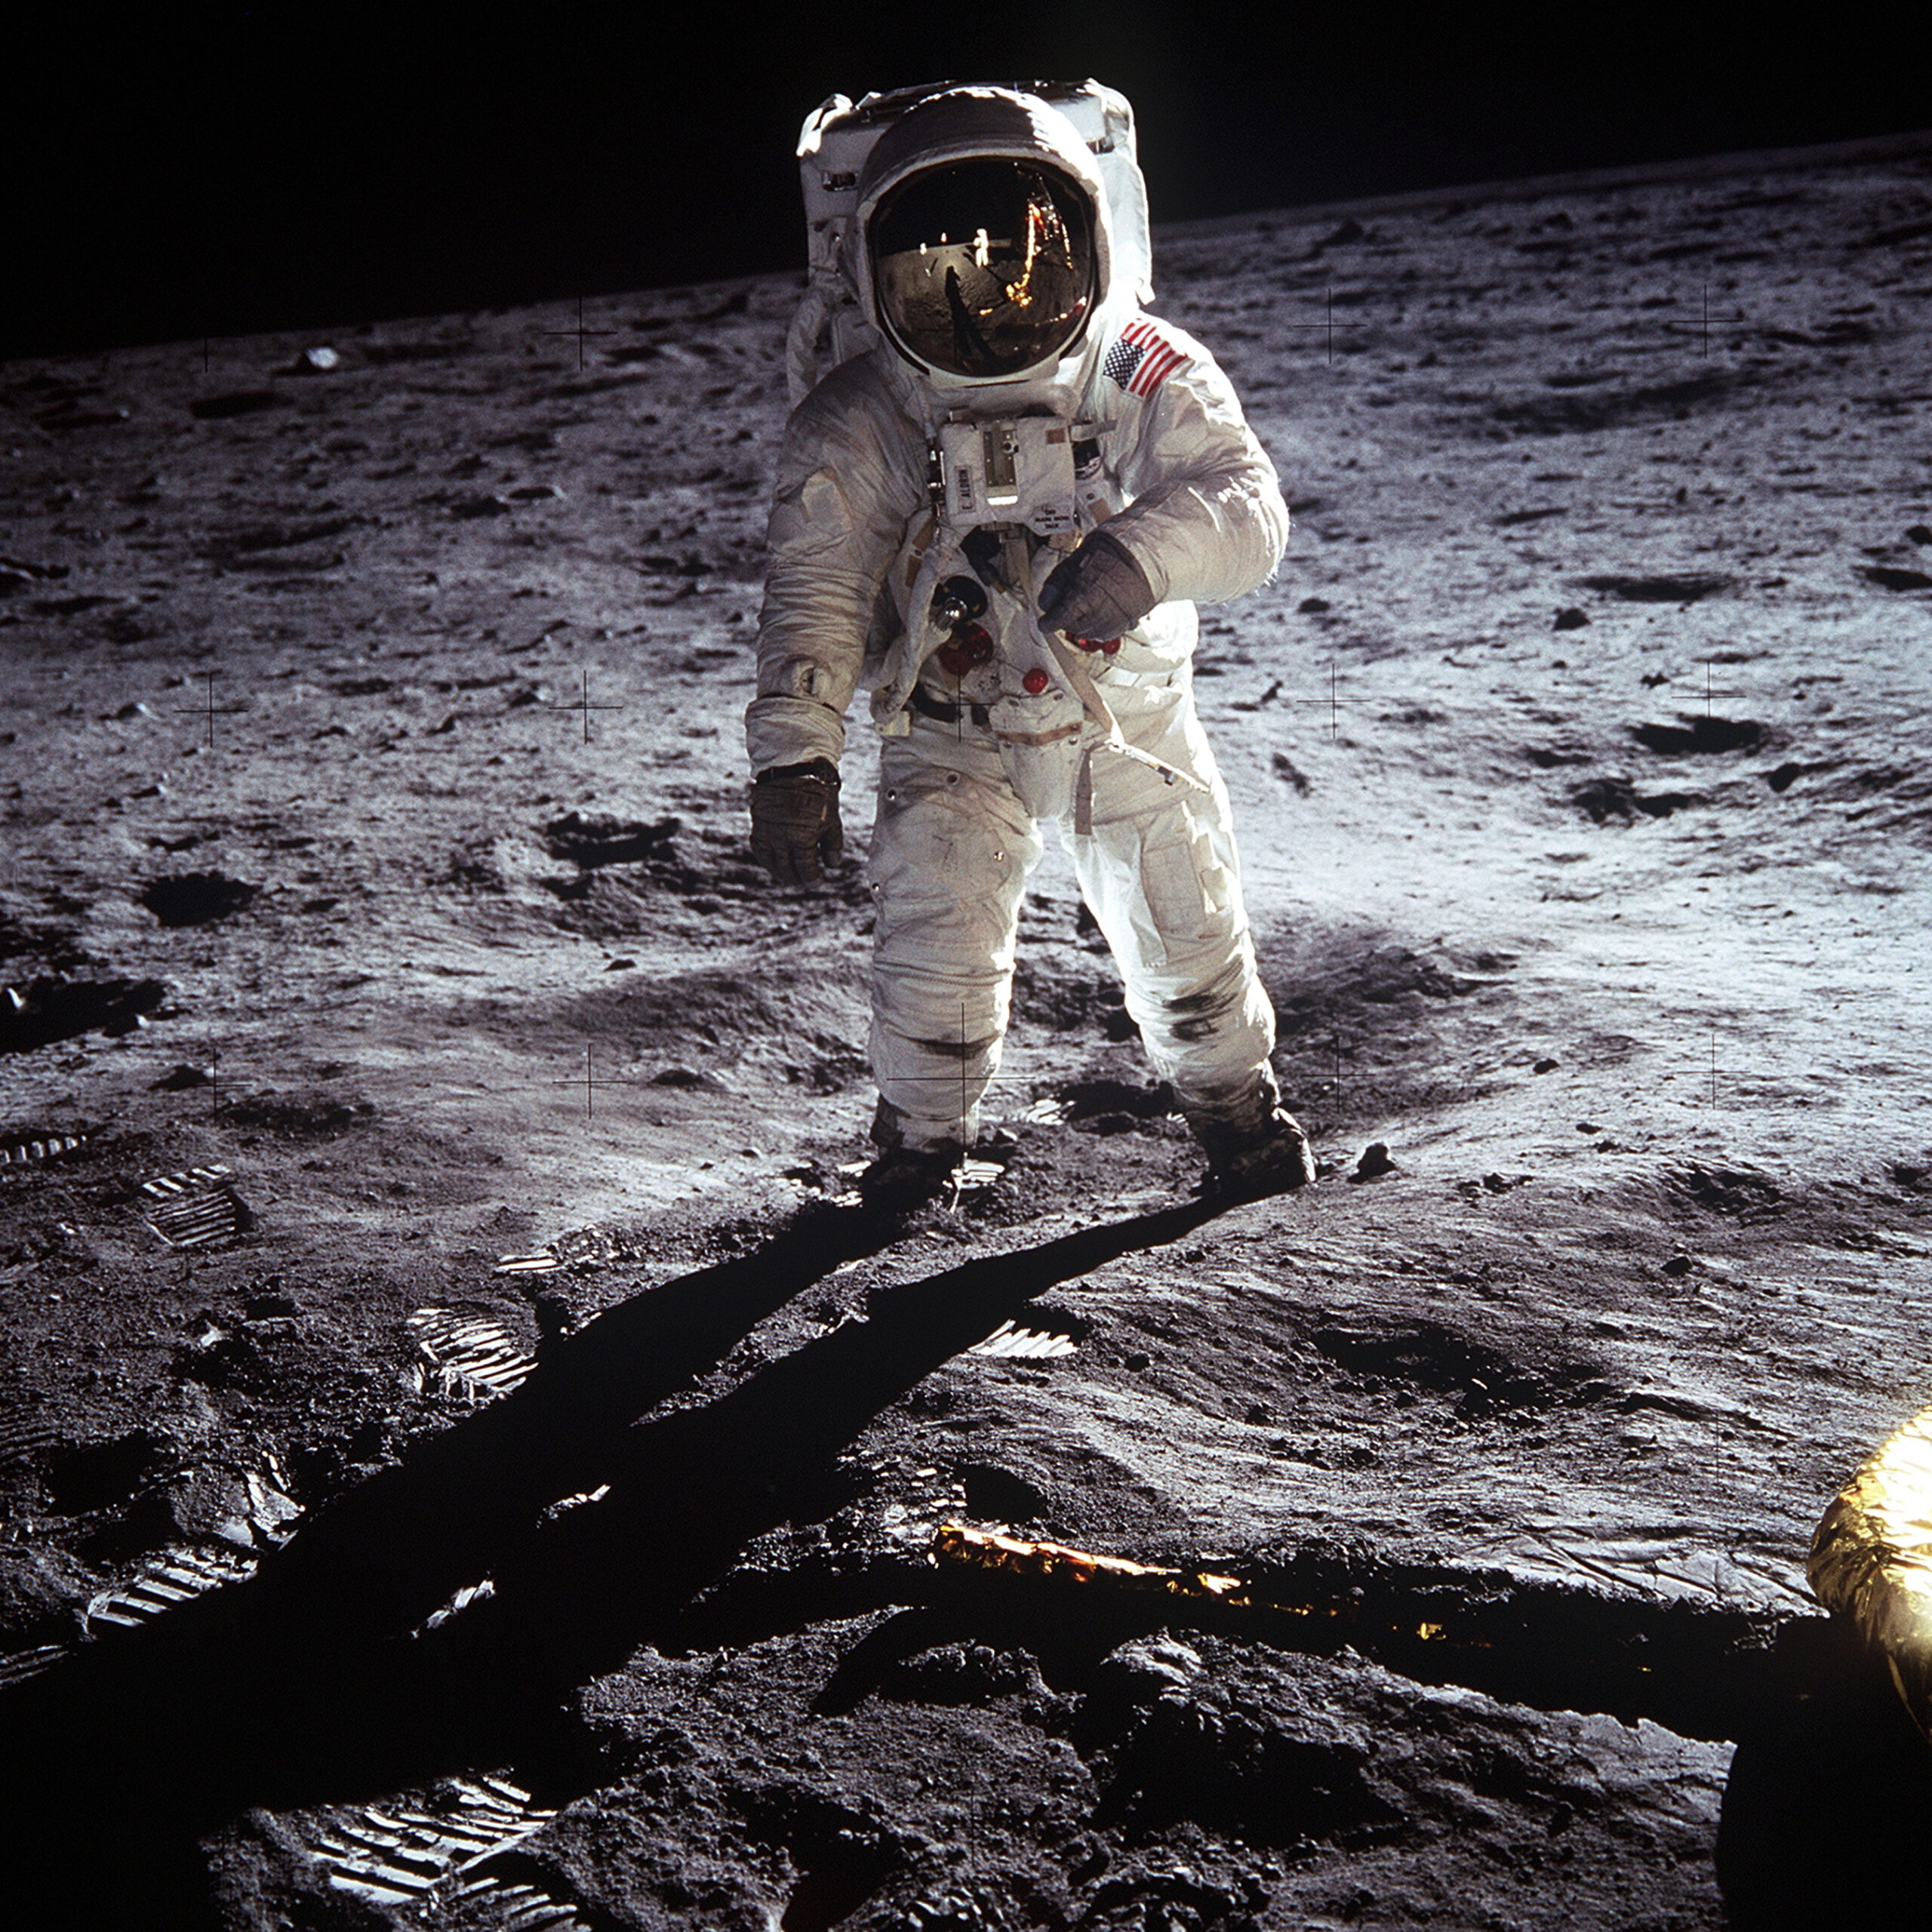 Astronaut Edwin “Buzz” Aldrin walks on the surface of the moon, July 20, 1969. photo: Neil Armstrong, NASA 